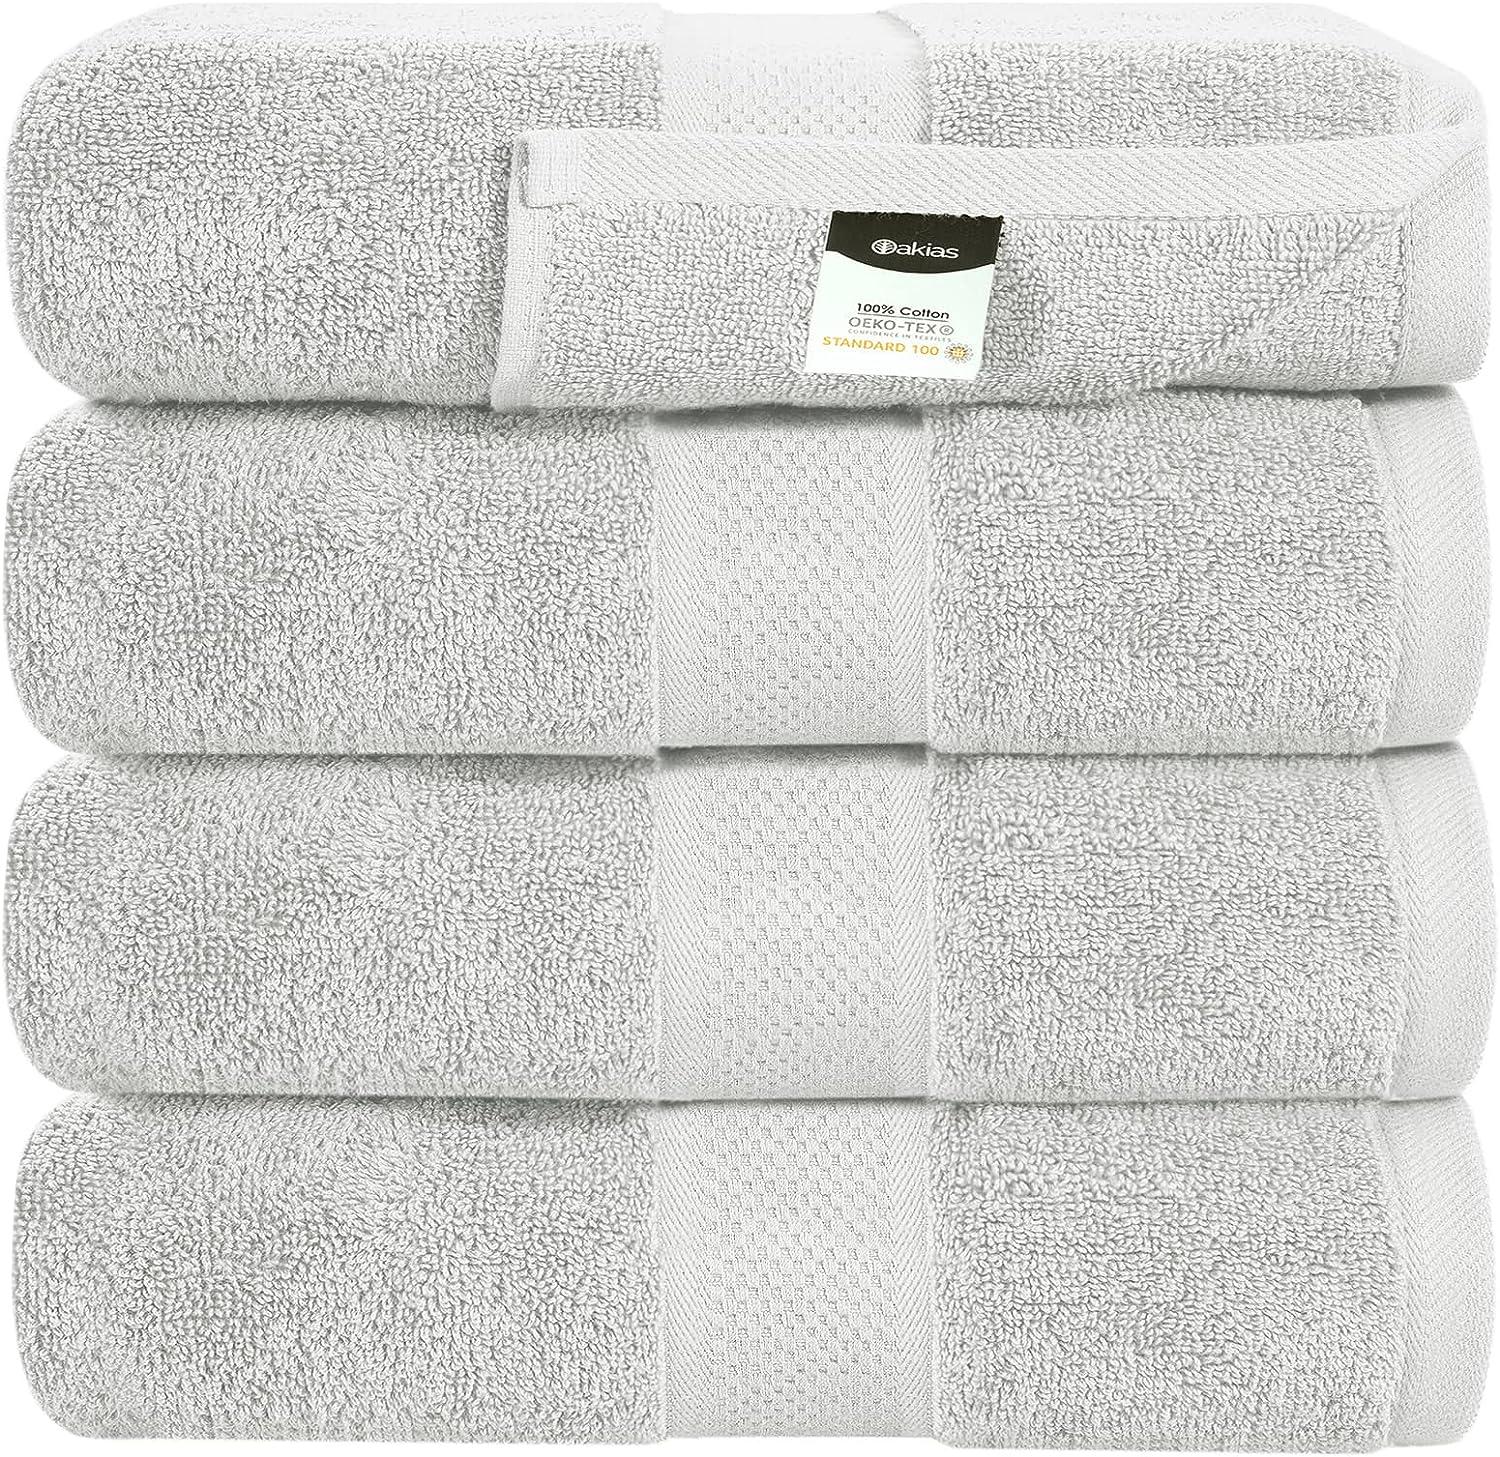 Wholesale Box of 24 SALBAKOS Bath Towels Sets Luxury Hotel and Spa Qua –  American Pillowcase